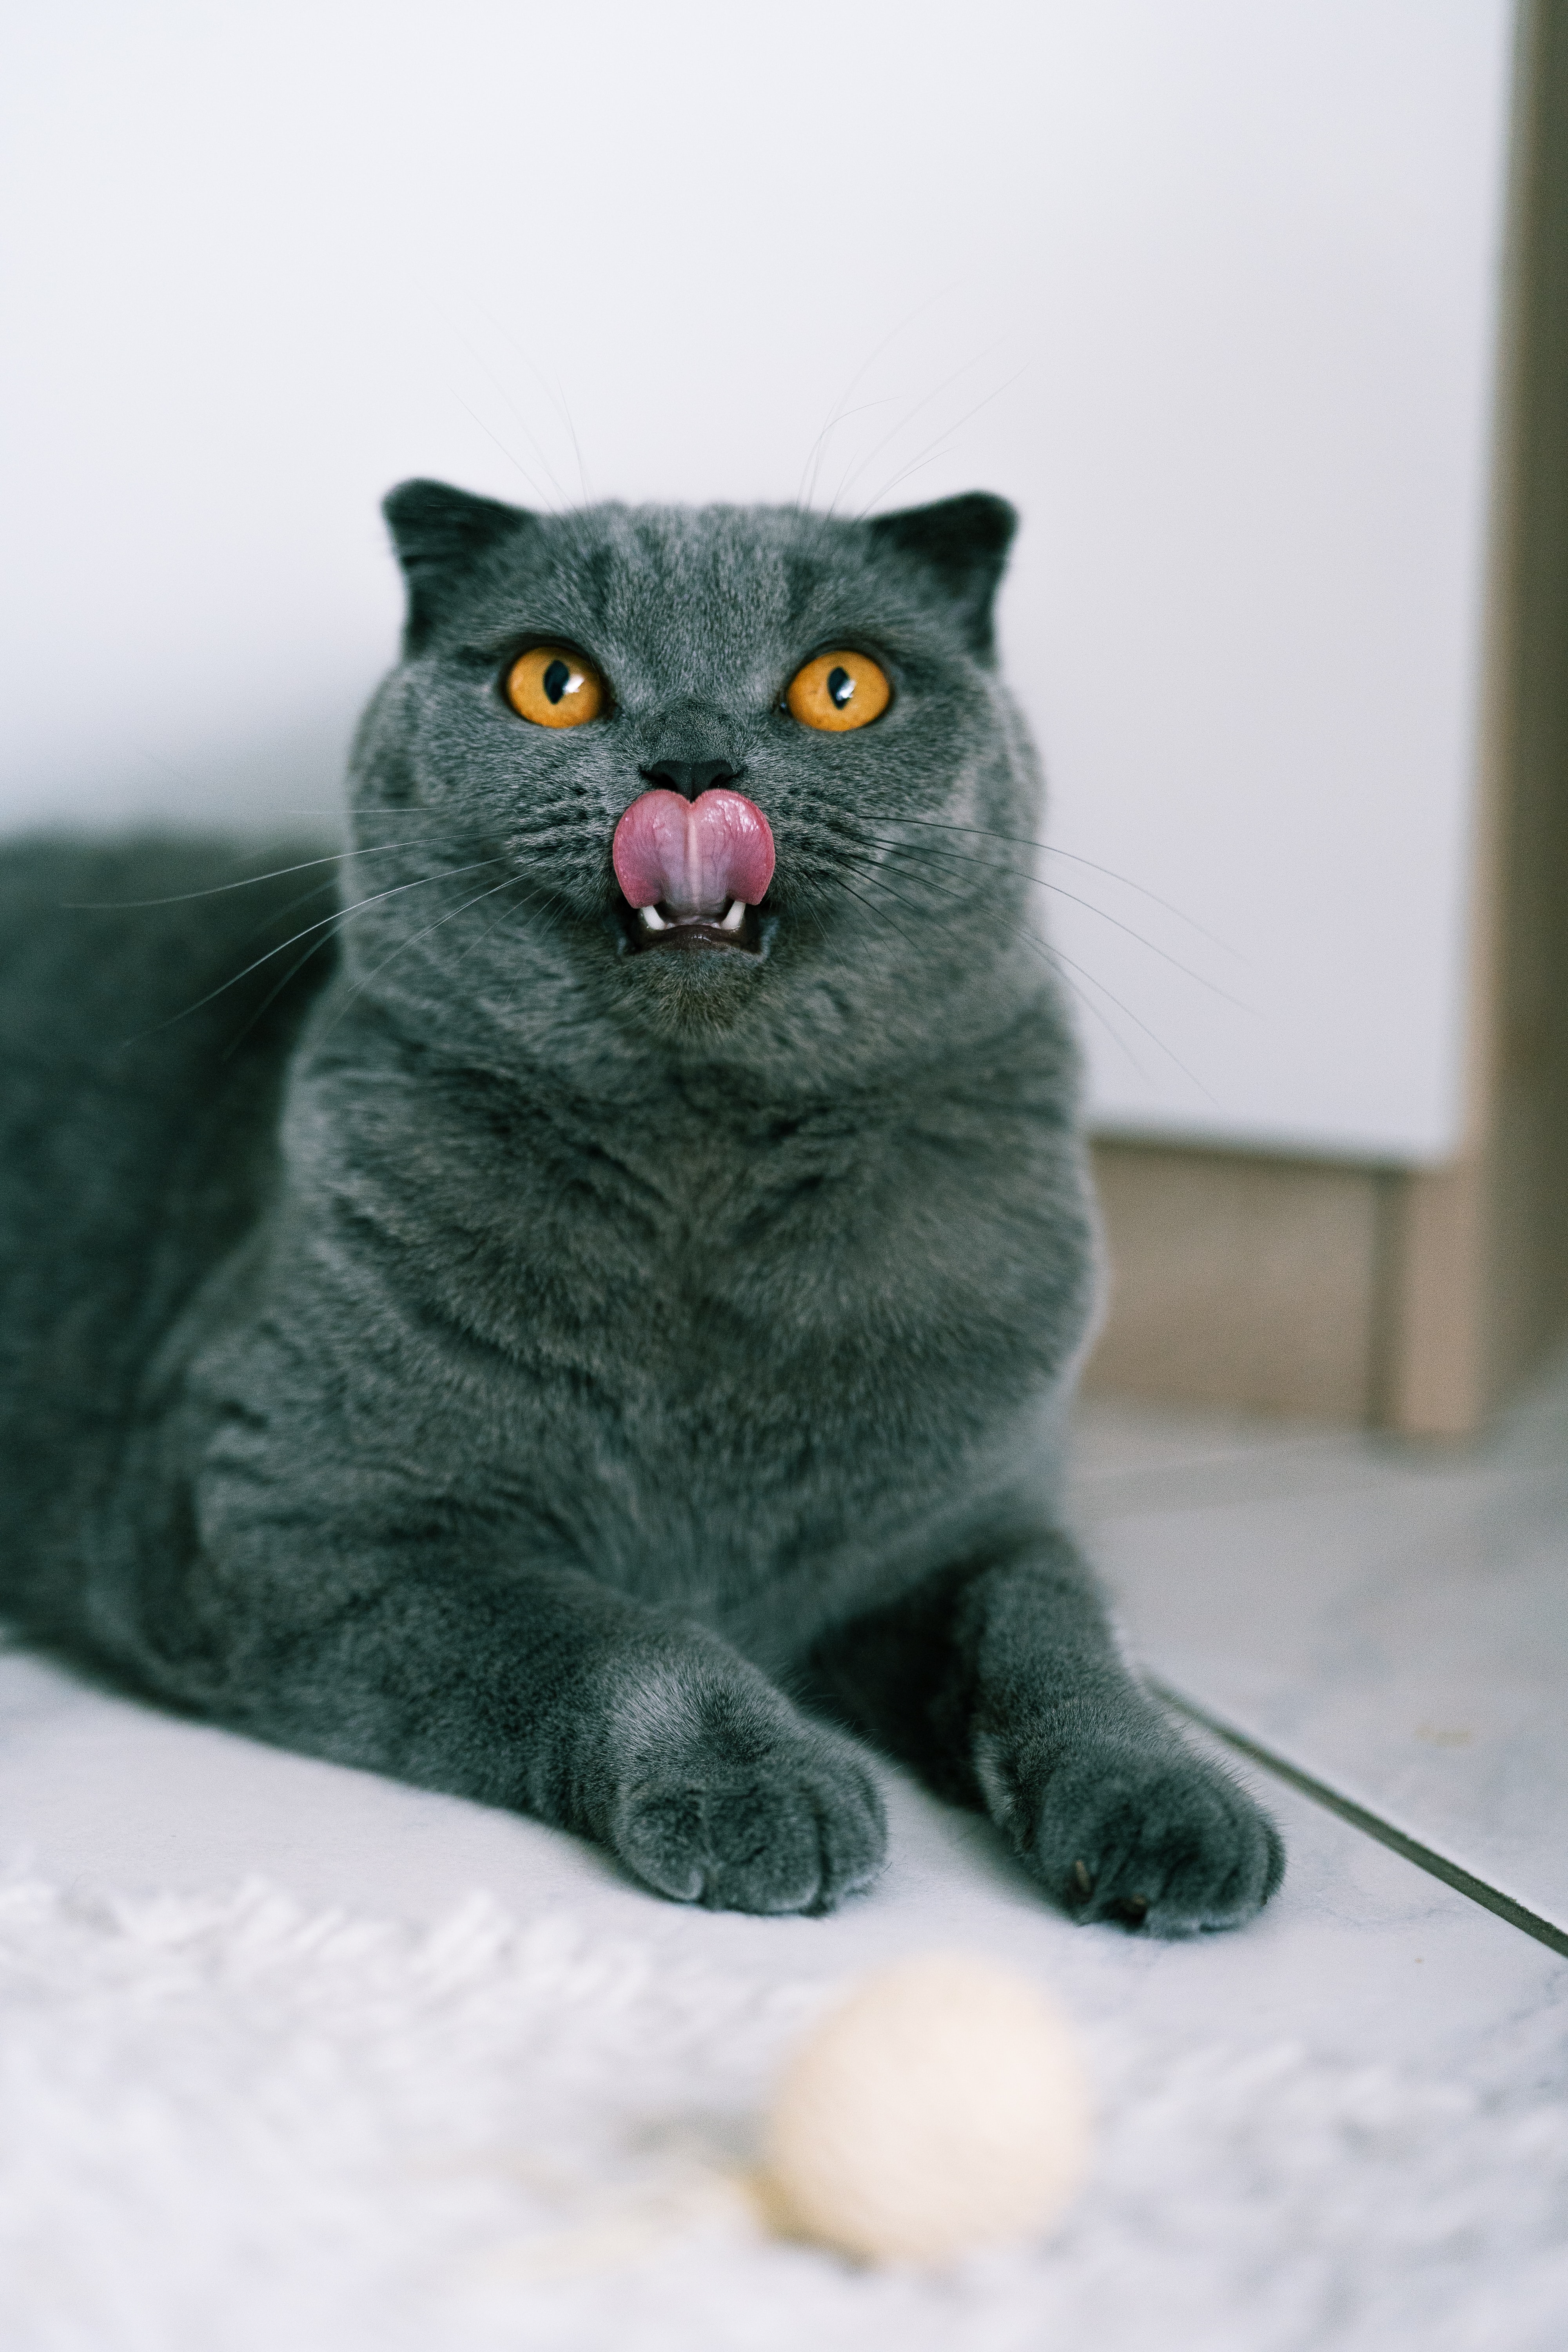 tongue stuck out, animals, cat, pet, sight, opinion, protruding tongue, british cat